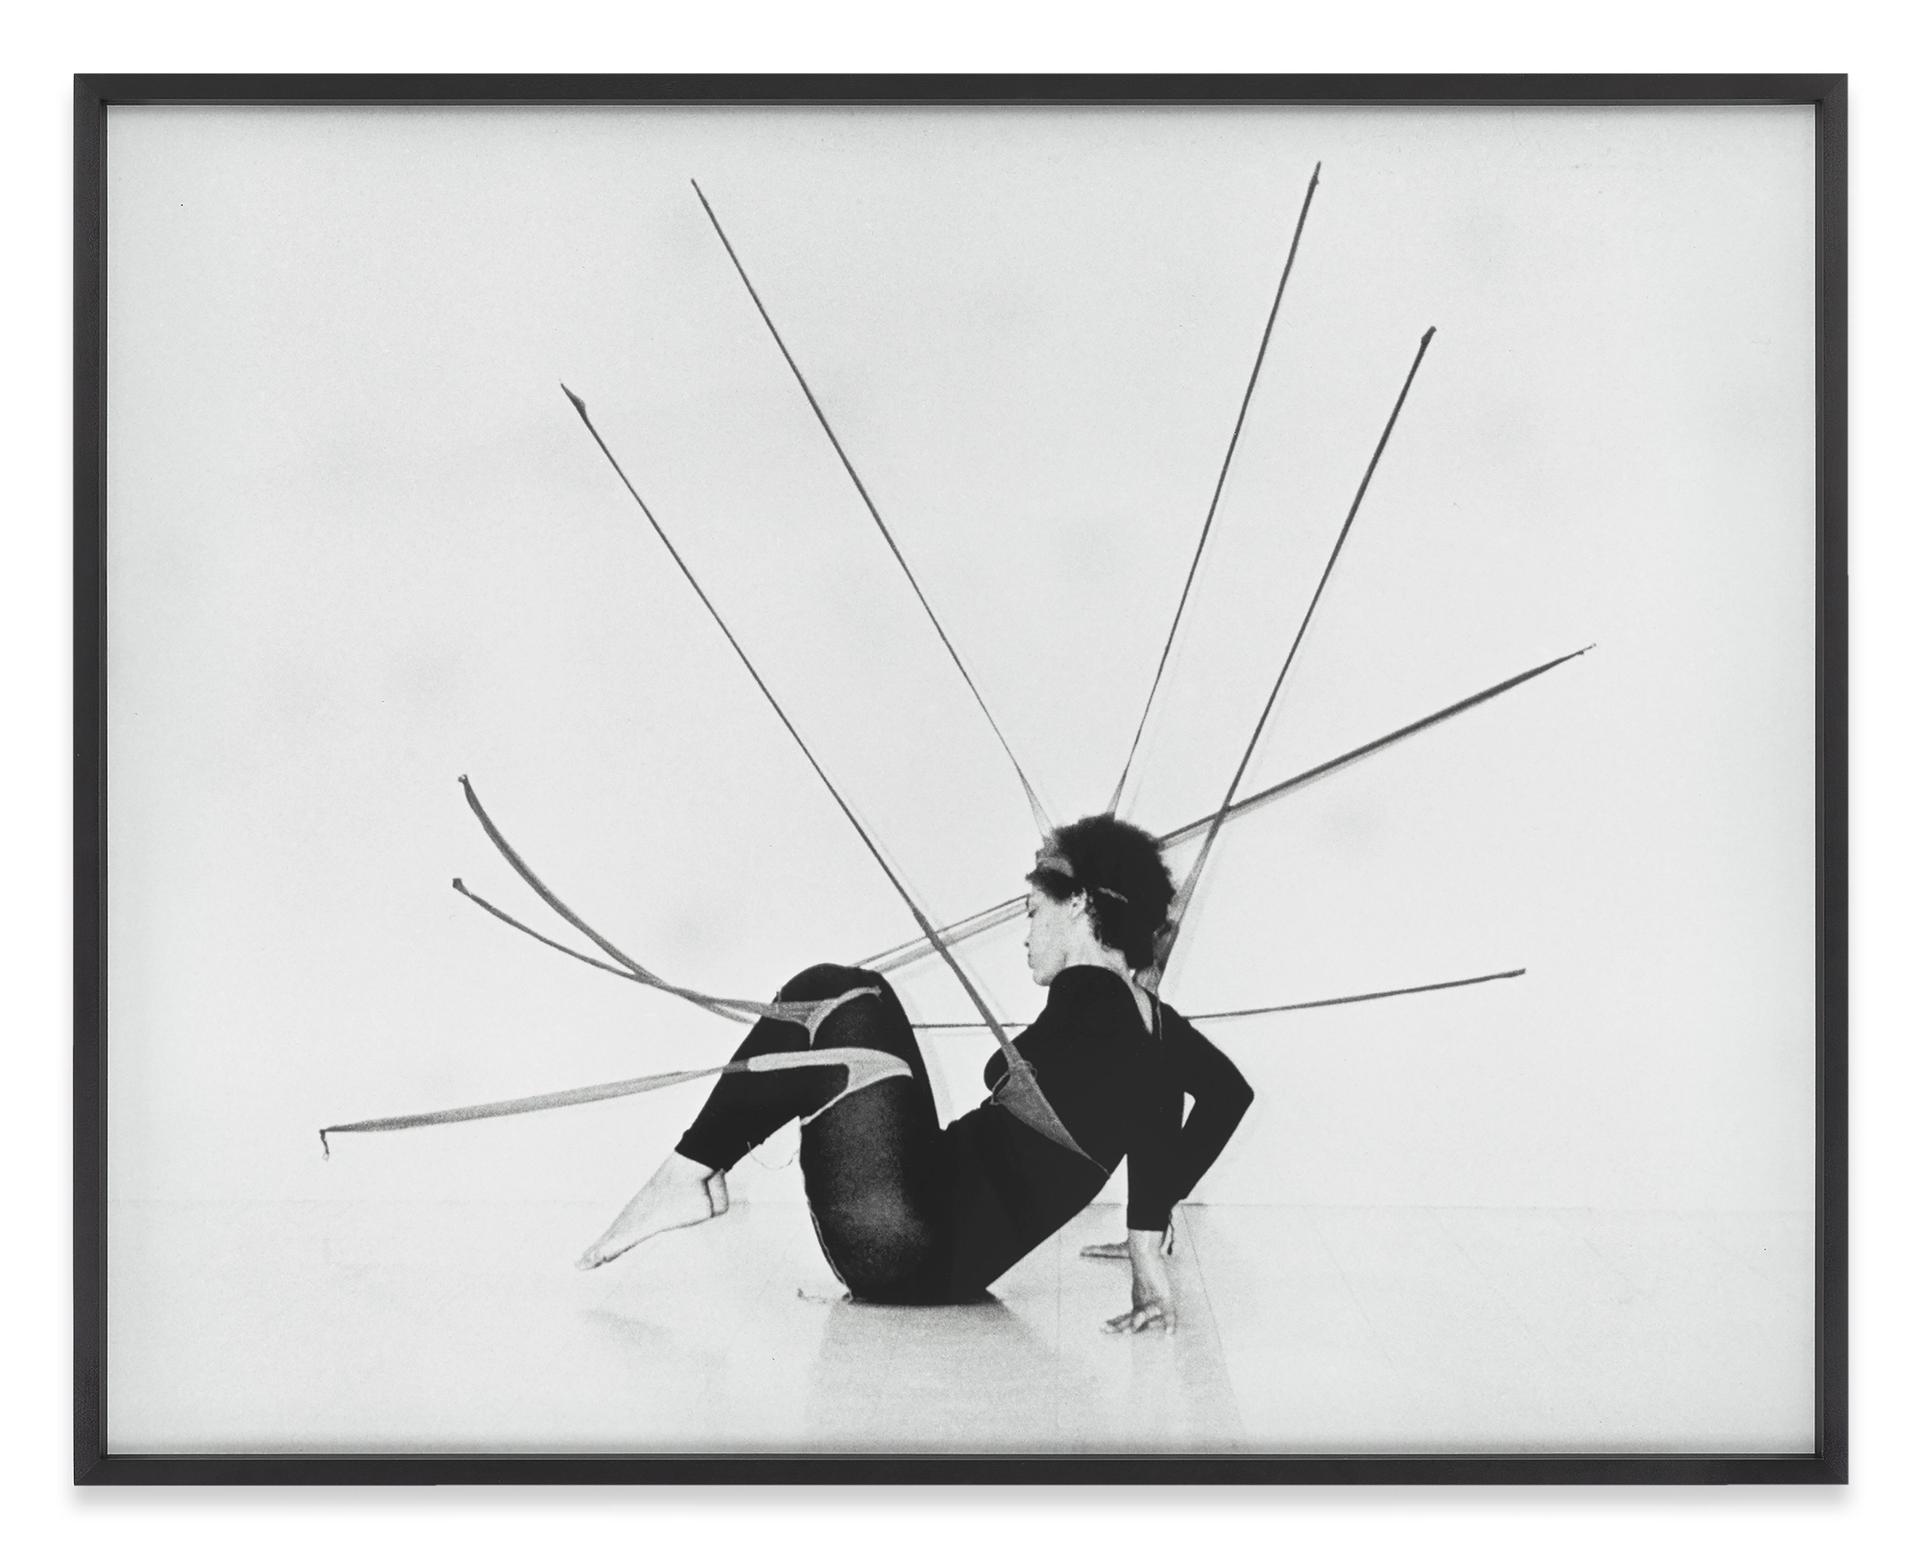 Senga Nengudi, Performance Piece (detail). Photo: Harmon Outlaw. © Senga Nengudi, 2022. Courtesy of Sprüth Magers and Thomas Erben Gallery, New York